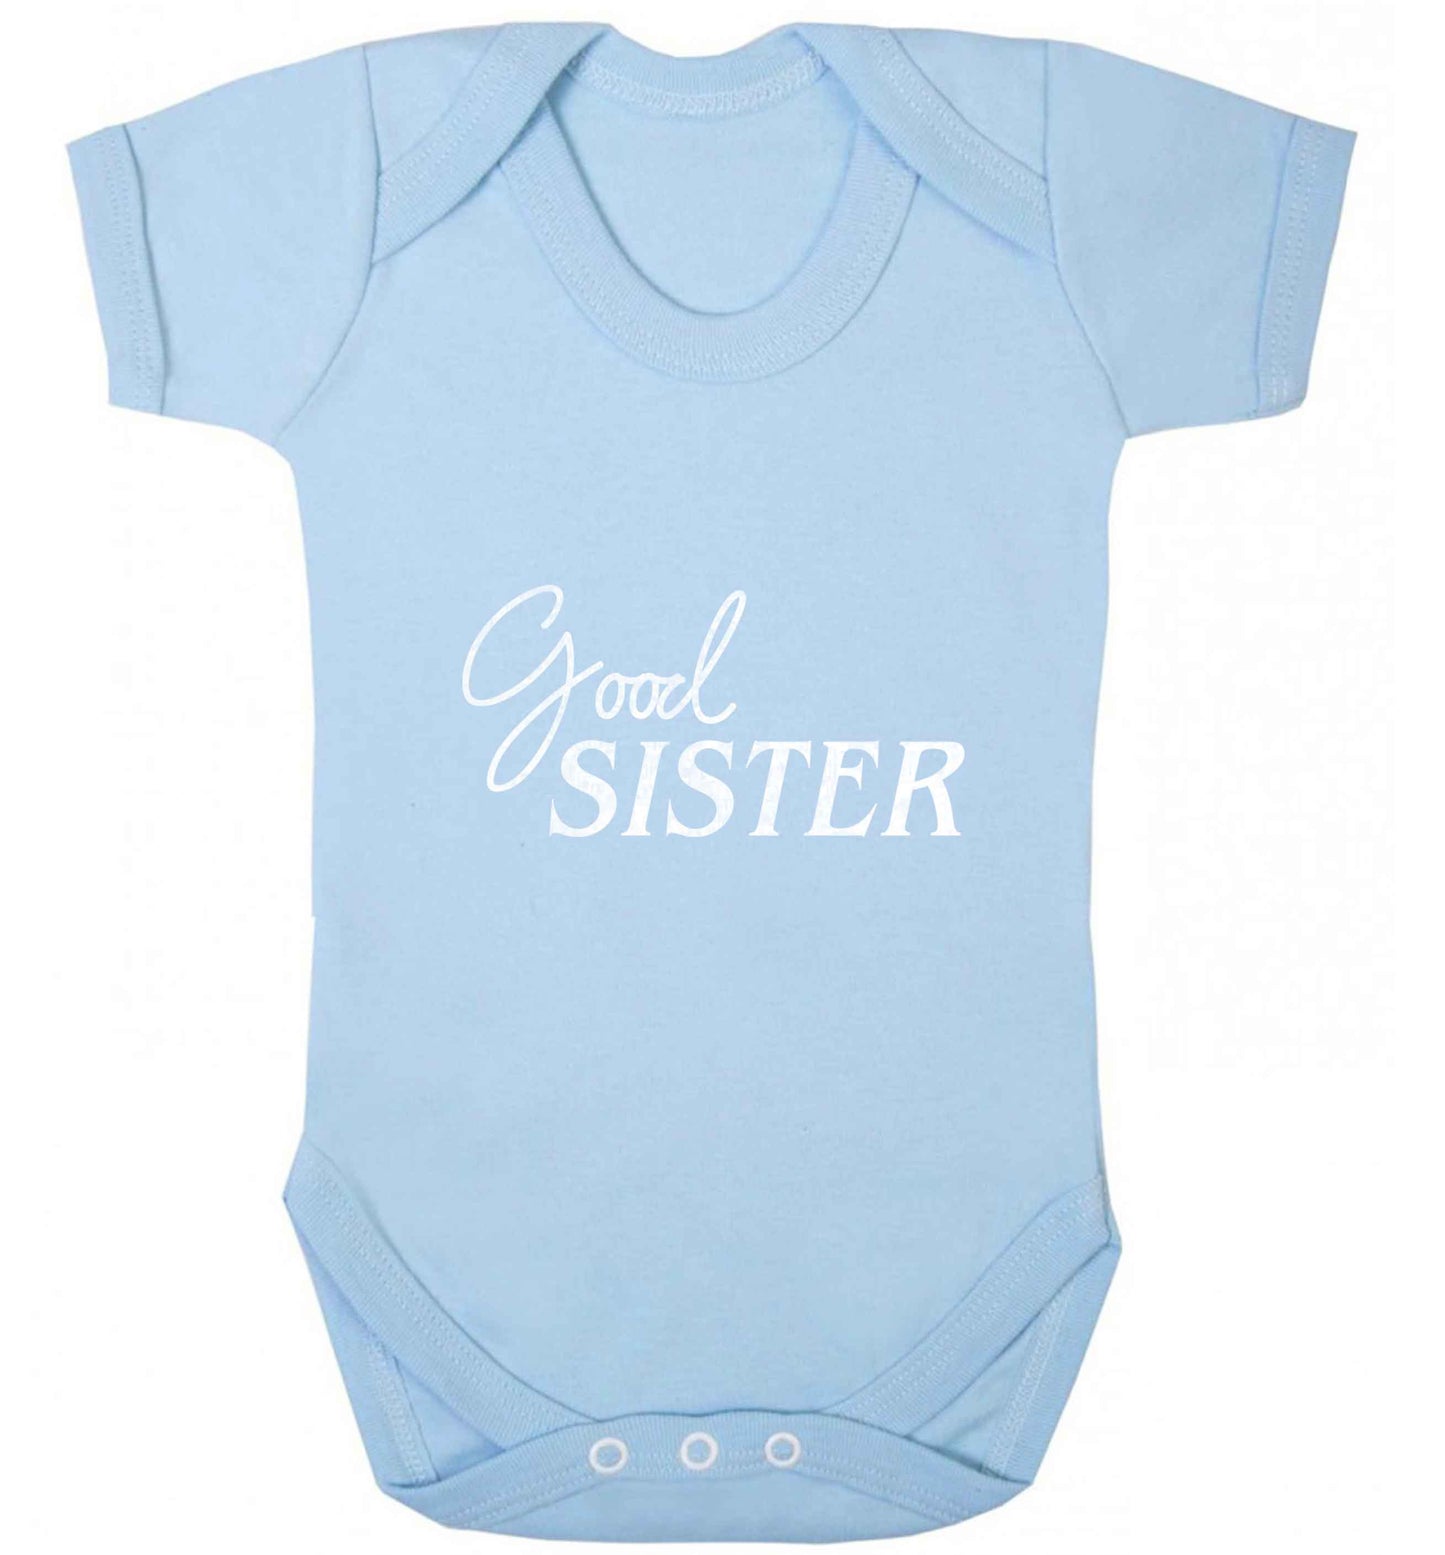 Good sister baby vest pale blue 18-24 months